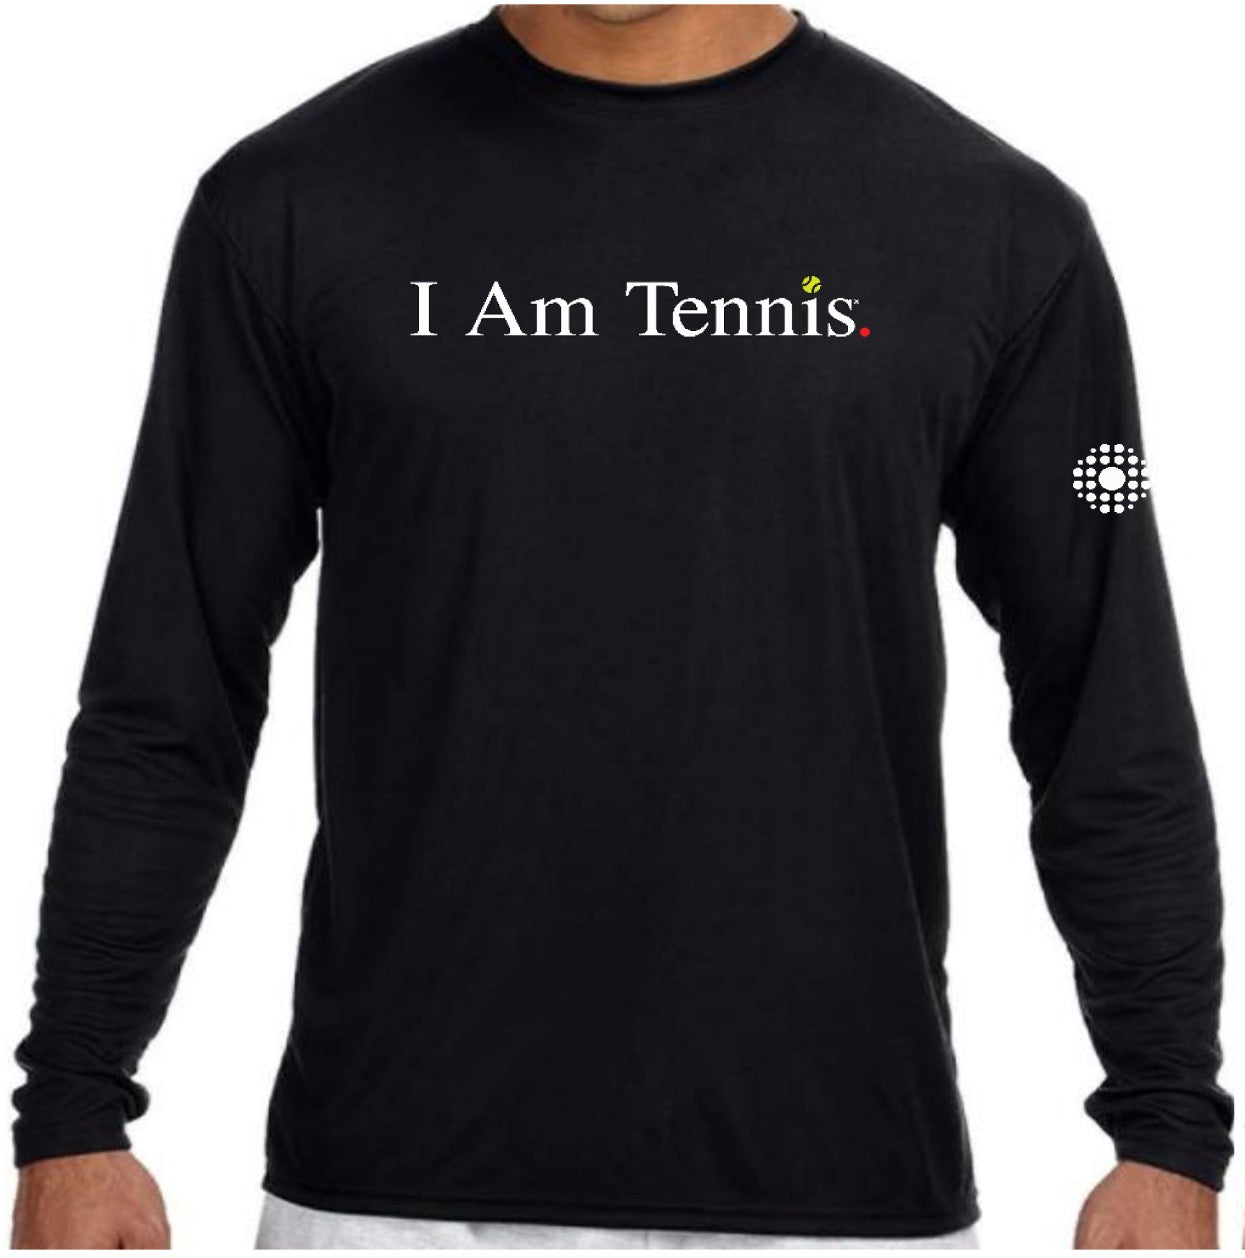 SpotSports "I Am Tennis" Long Sleeve